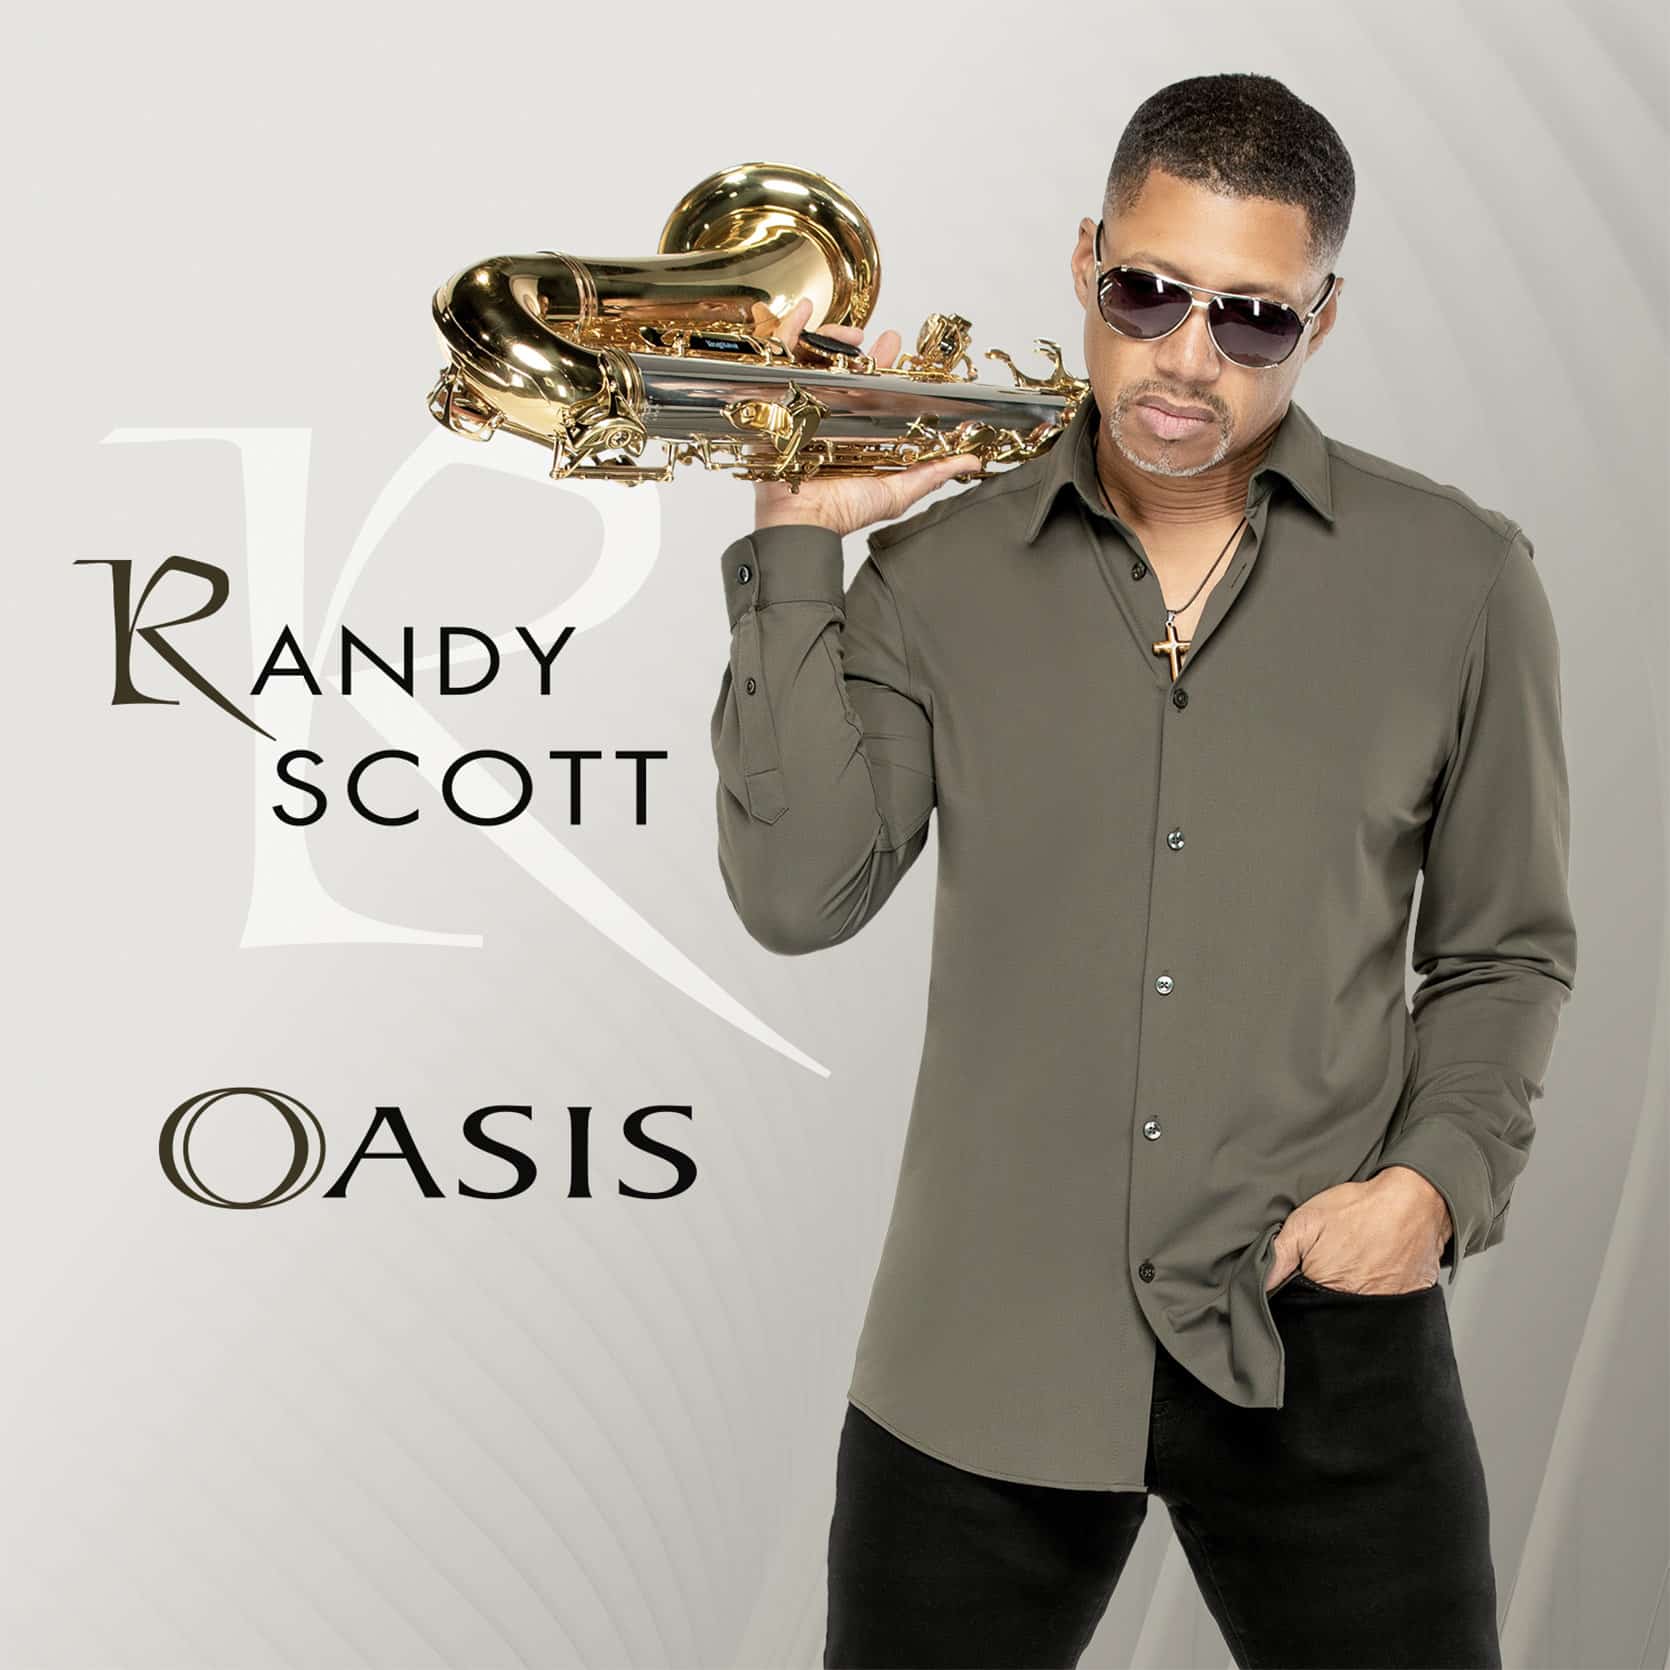 Listen to Oasis by Smooth Jazz recording artist Randy Scott